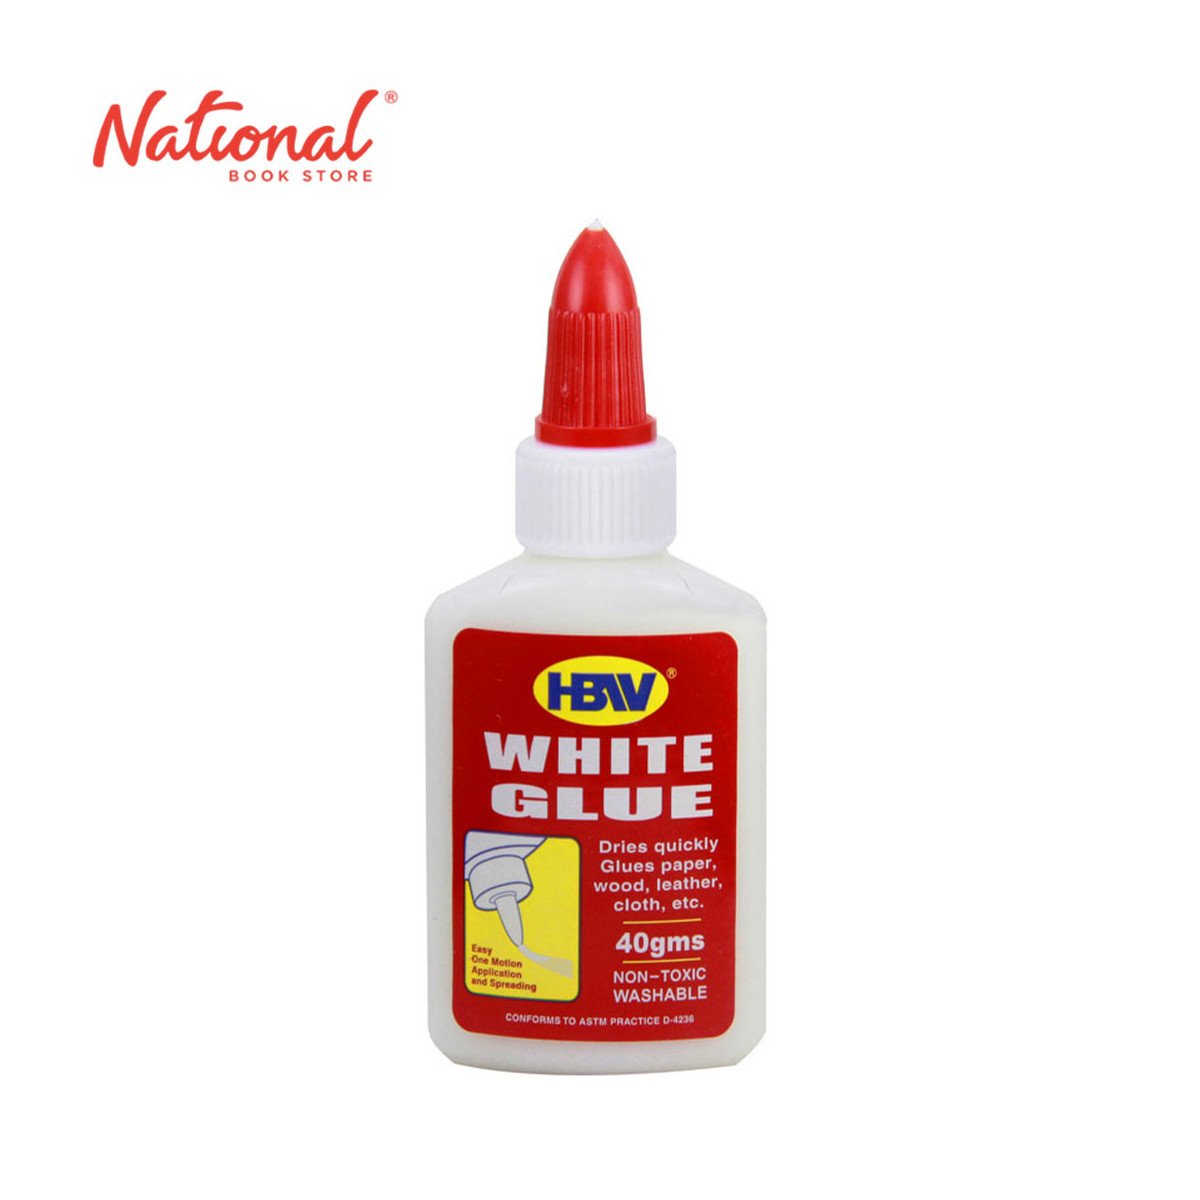 HBW Glue white 40Grams G-40 - Back to School Supplies